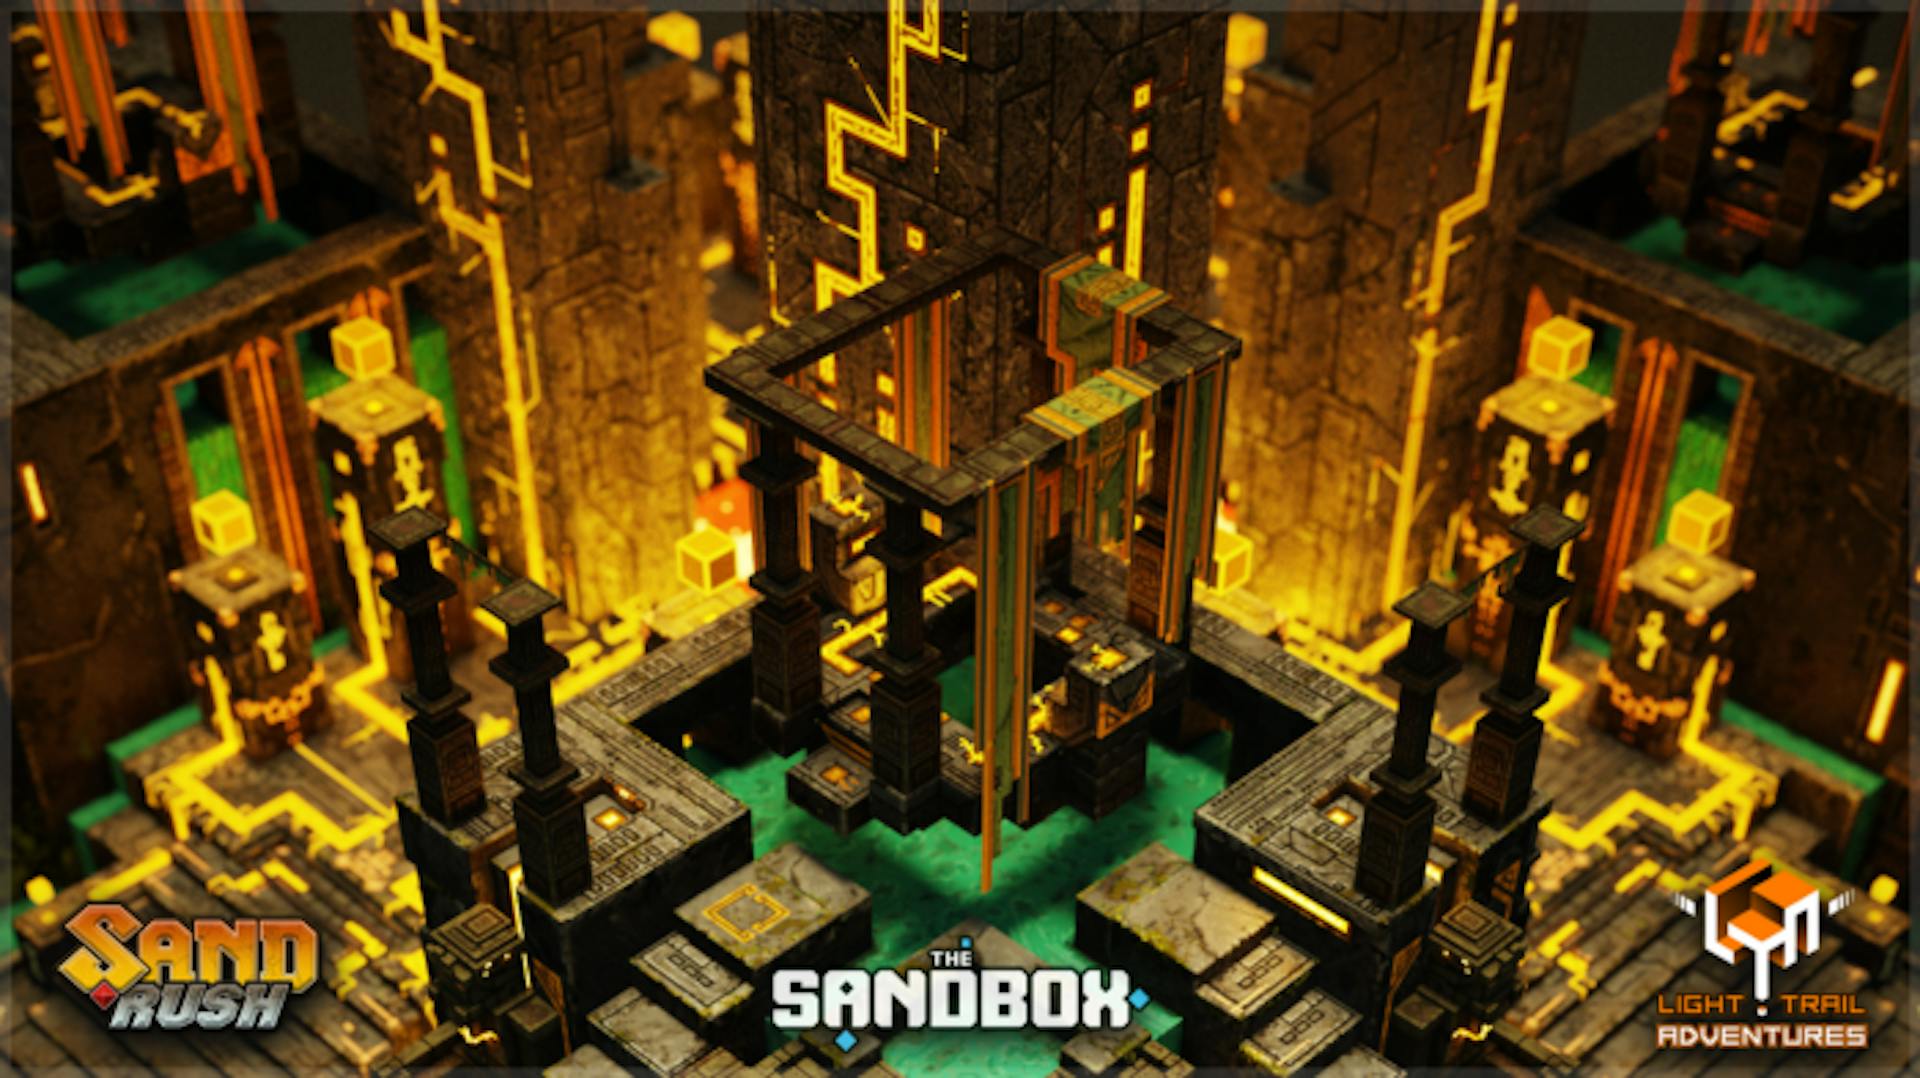 Shrine of Kongz - Source: The Sandbox